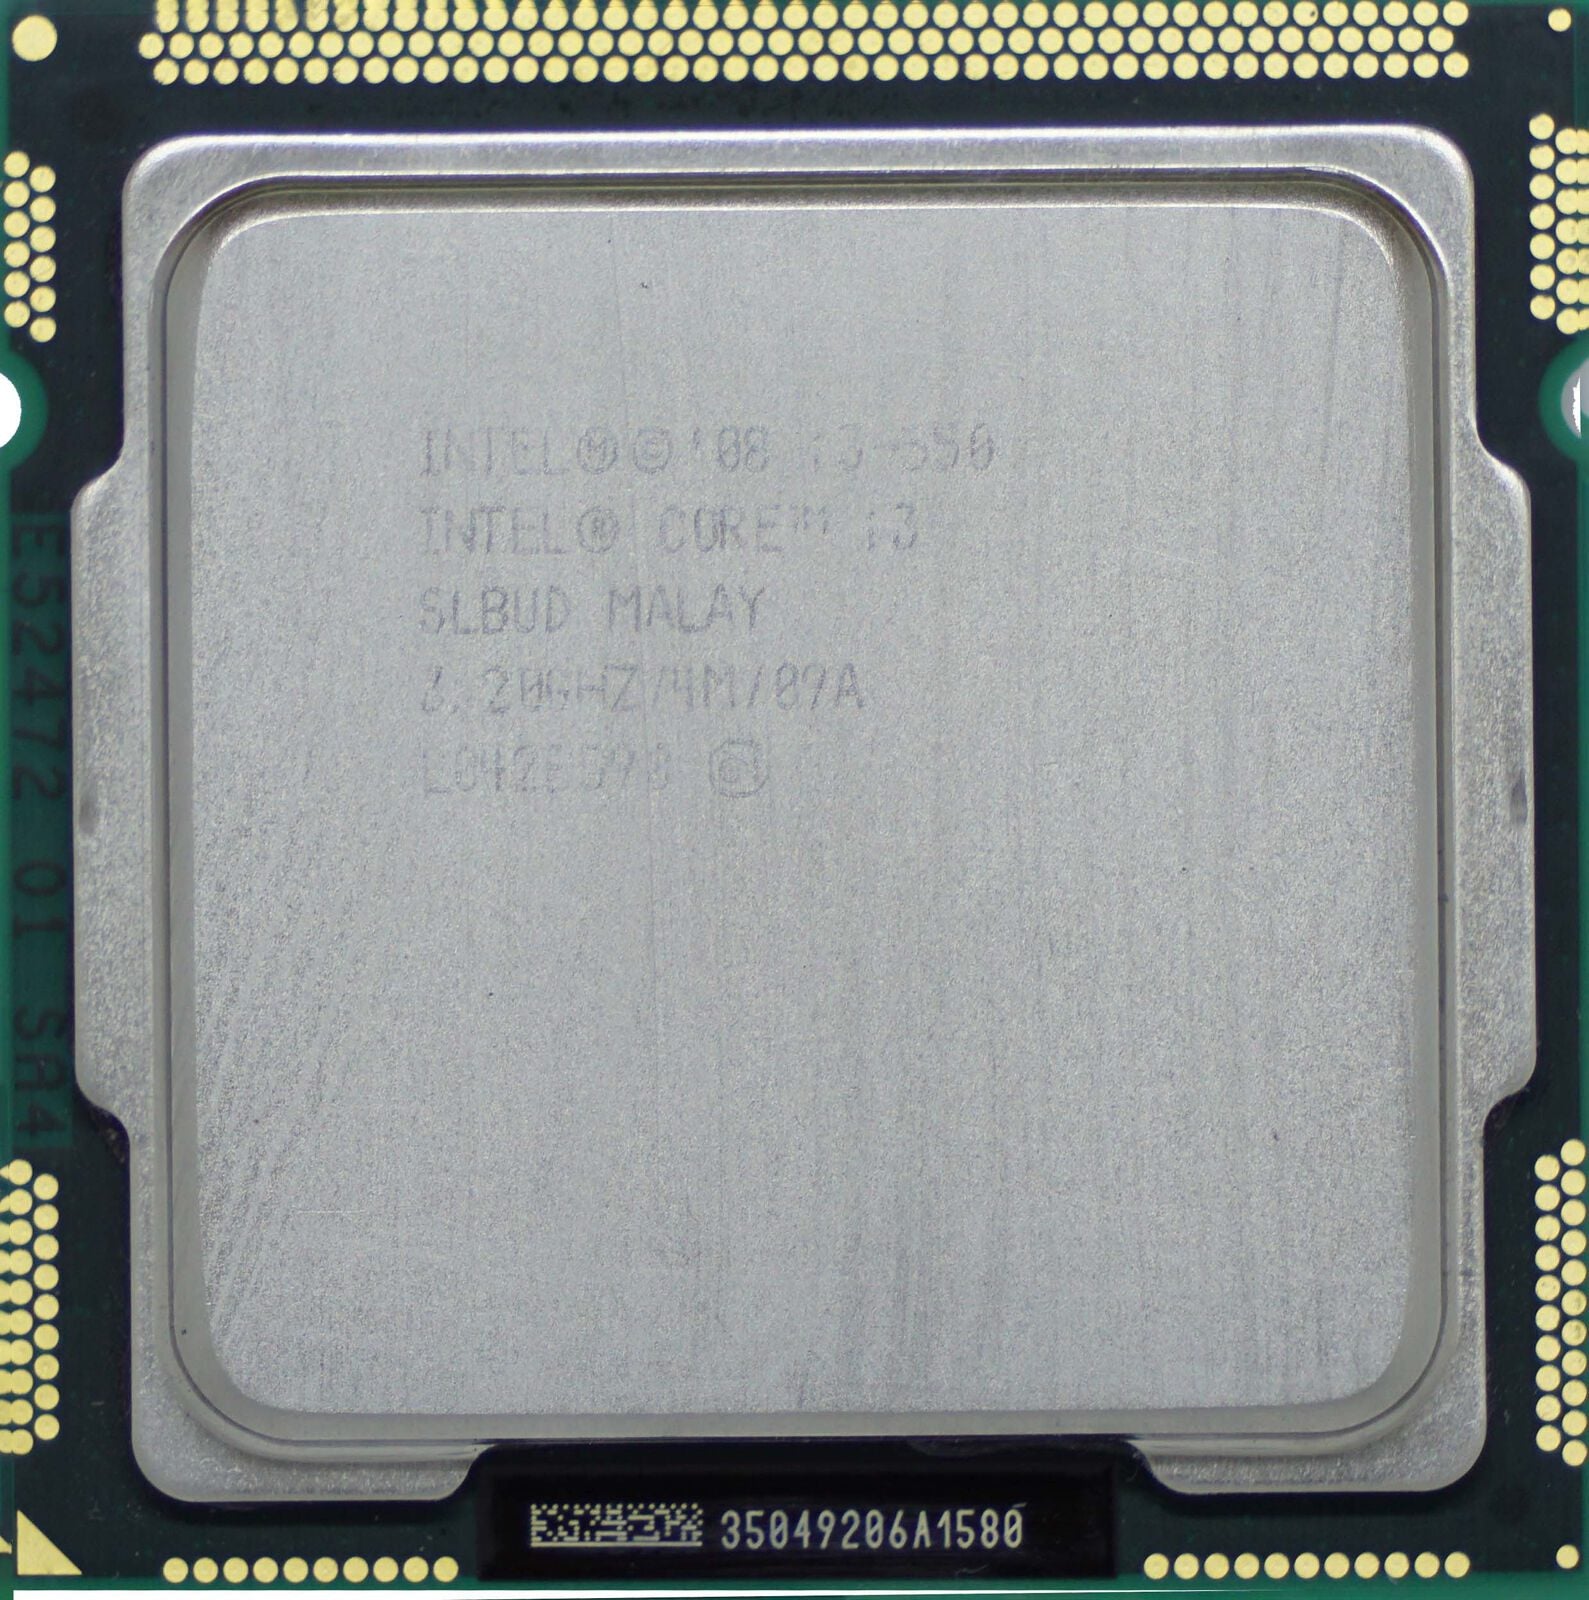 Intel Core i3-550 ( Slbud ) 3.20GHz 2-Core LGA1156 CPU